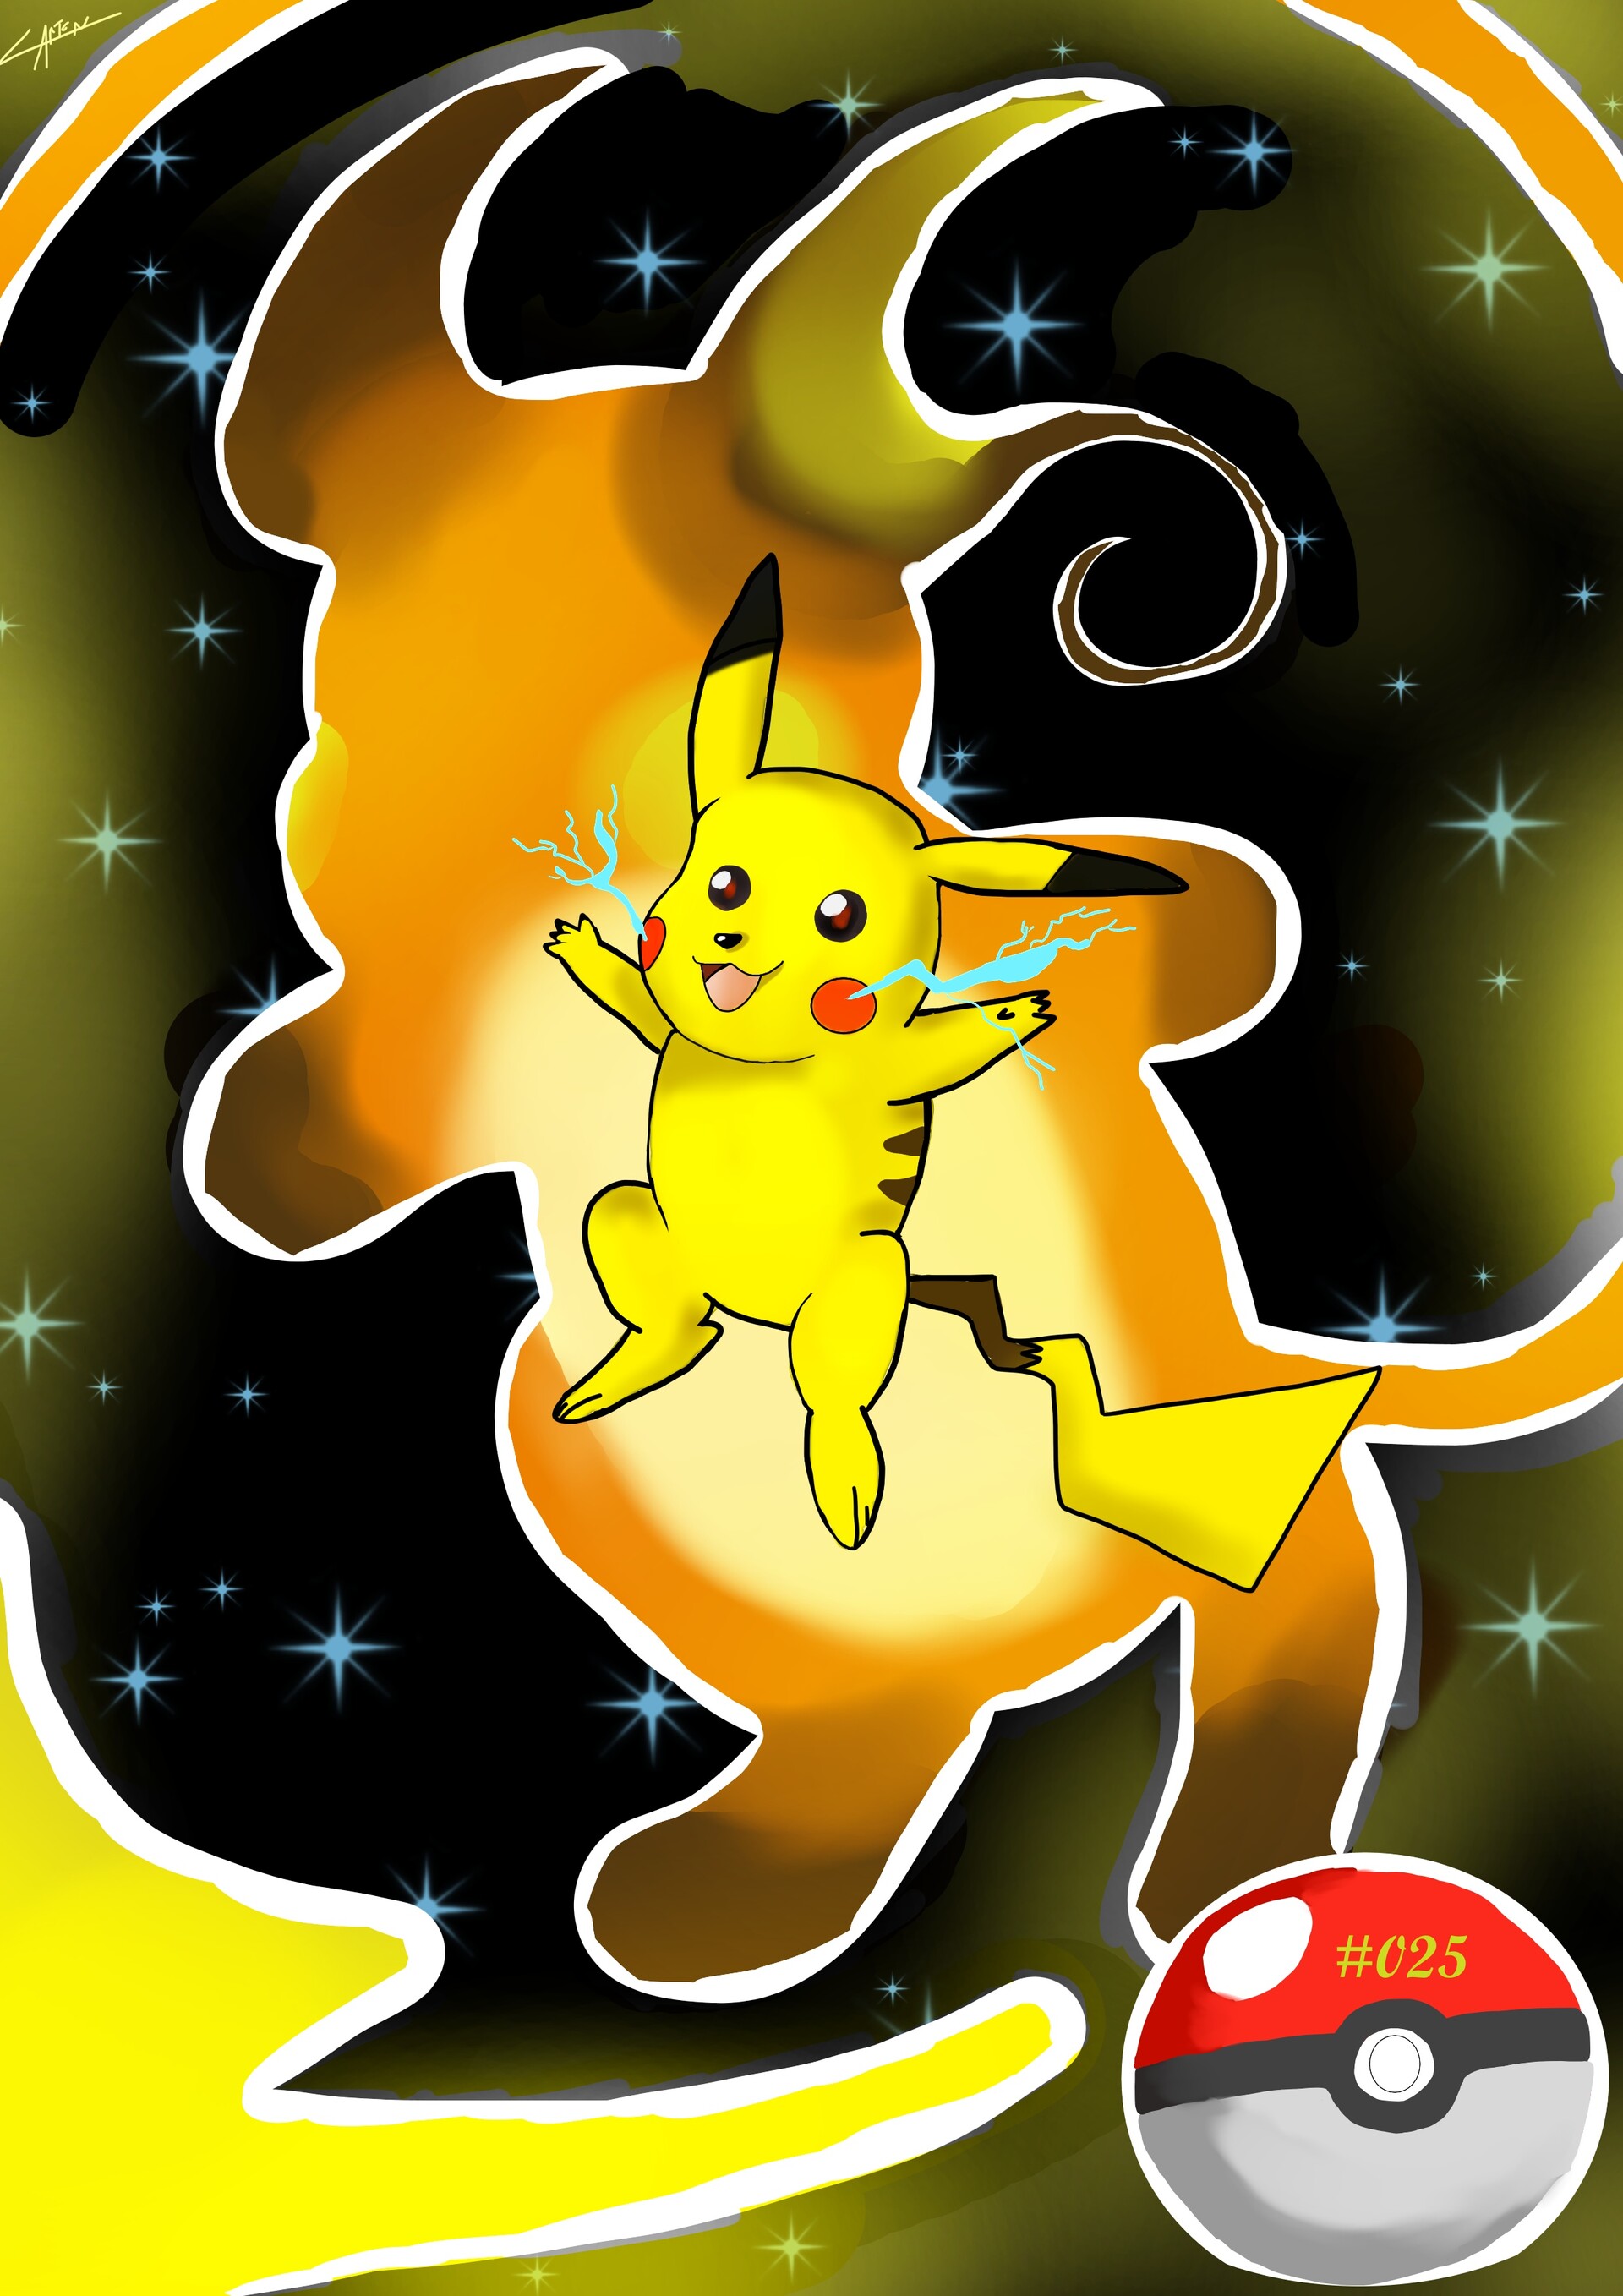 ArtStation - Tamagotchi Pikachu